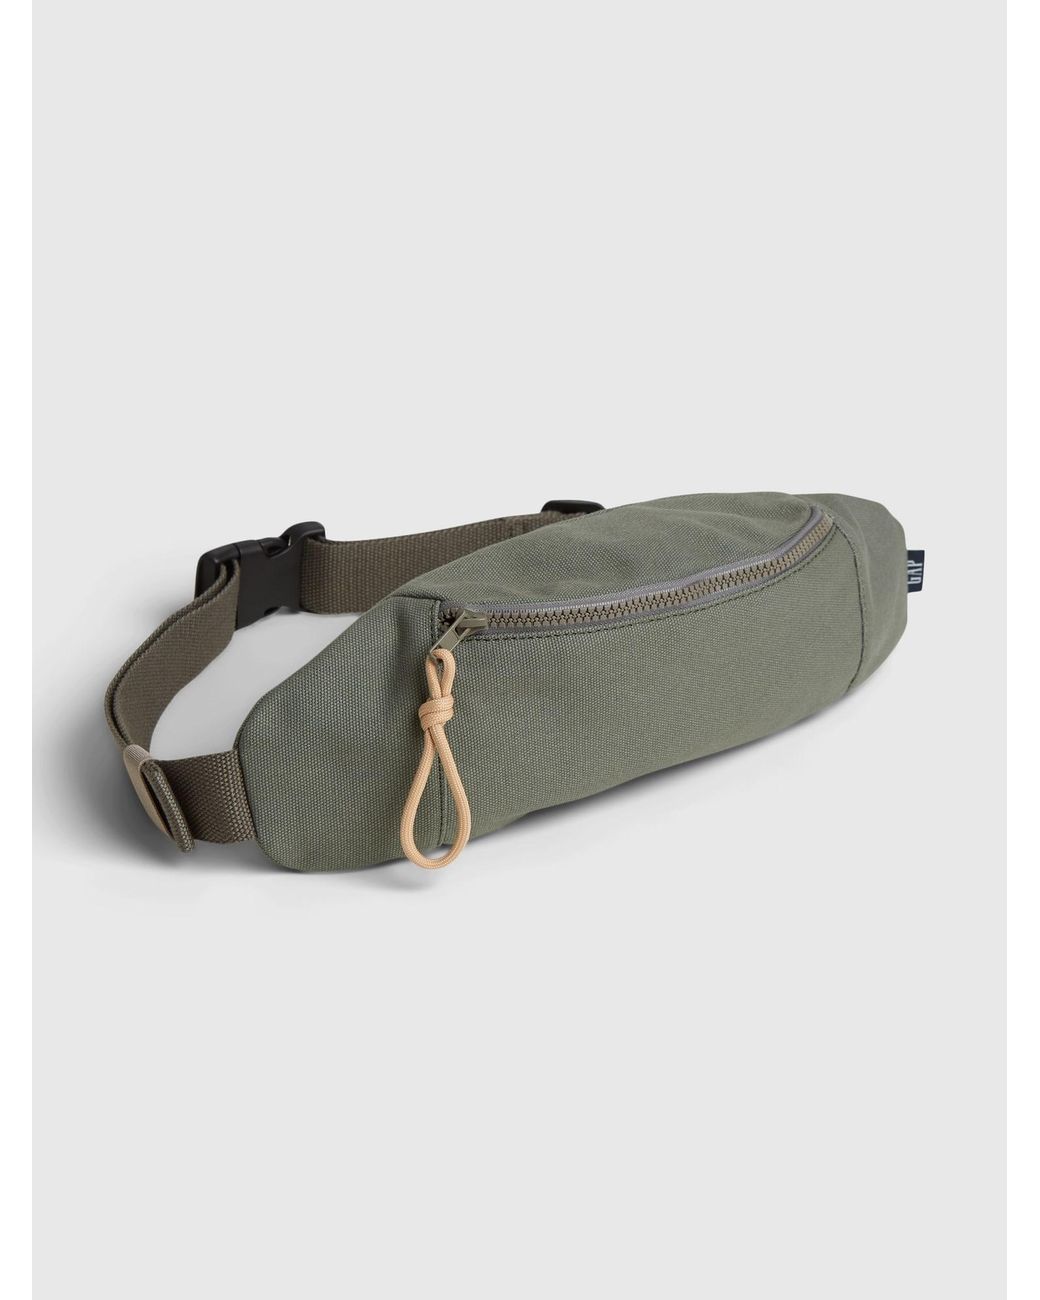 Gap Canvas Belt Bag in Olive Green (Green) - Lyst